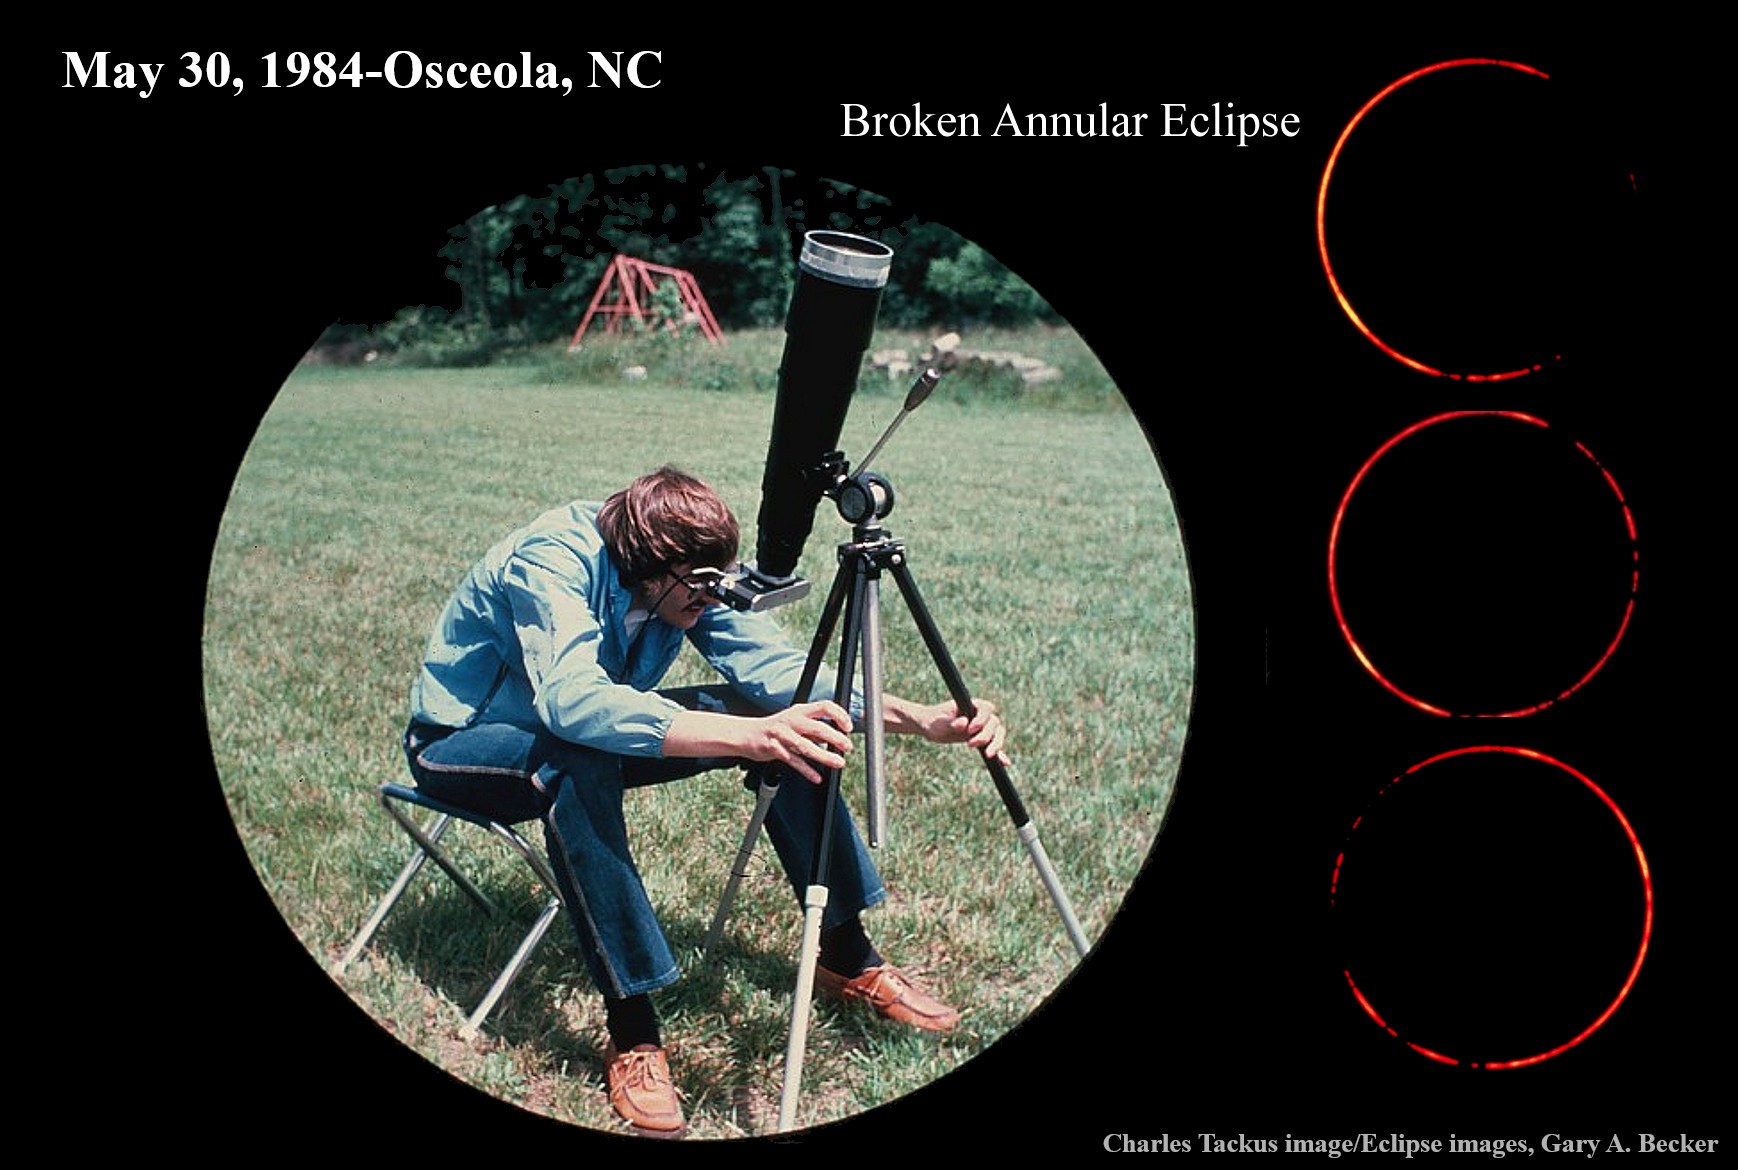 [Broken Annular Eclipse, May 30, 1984]